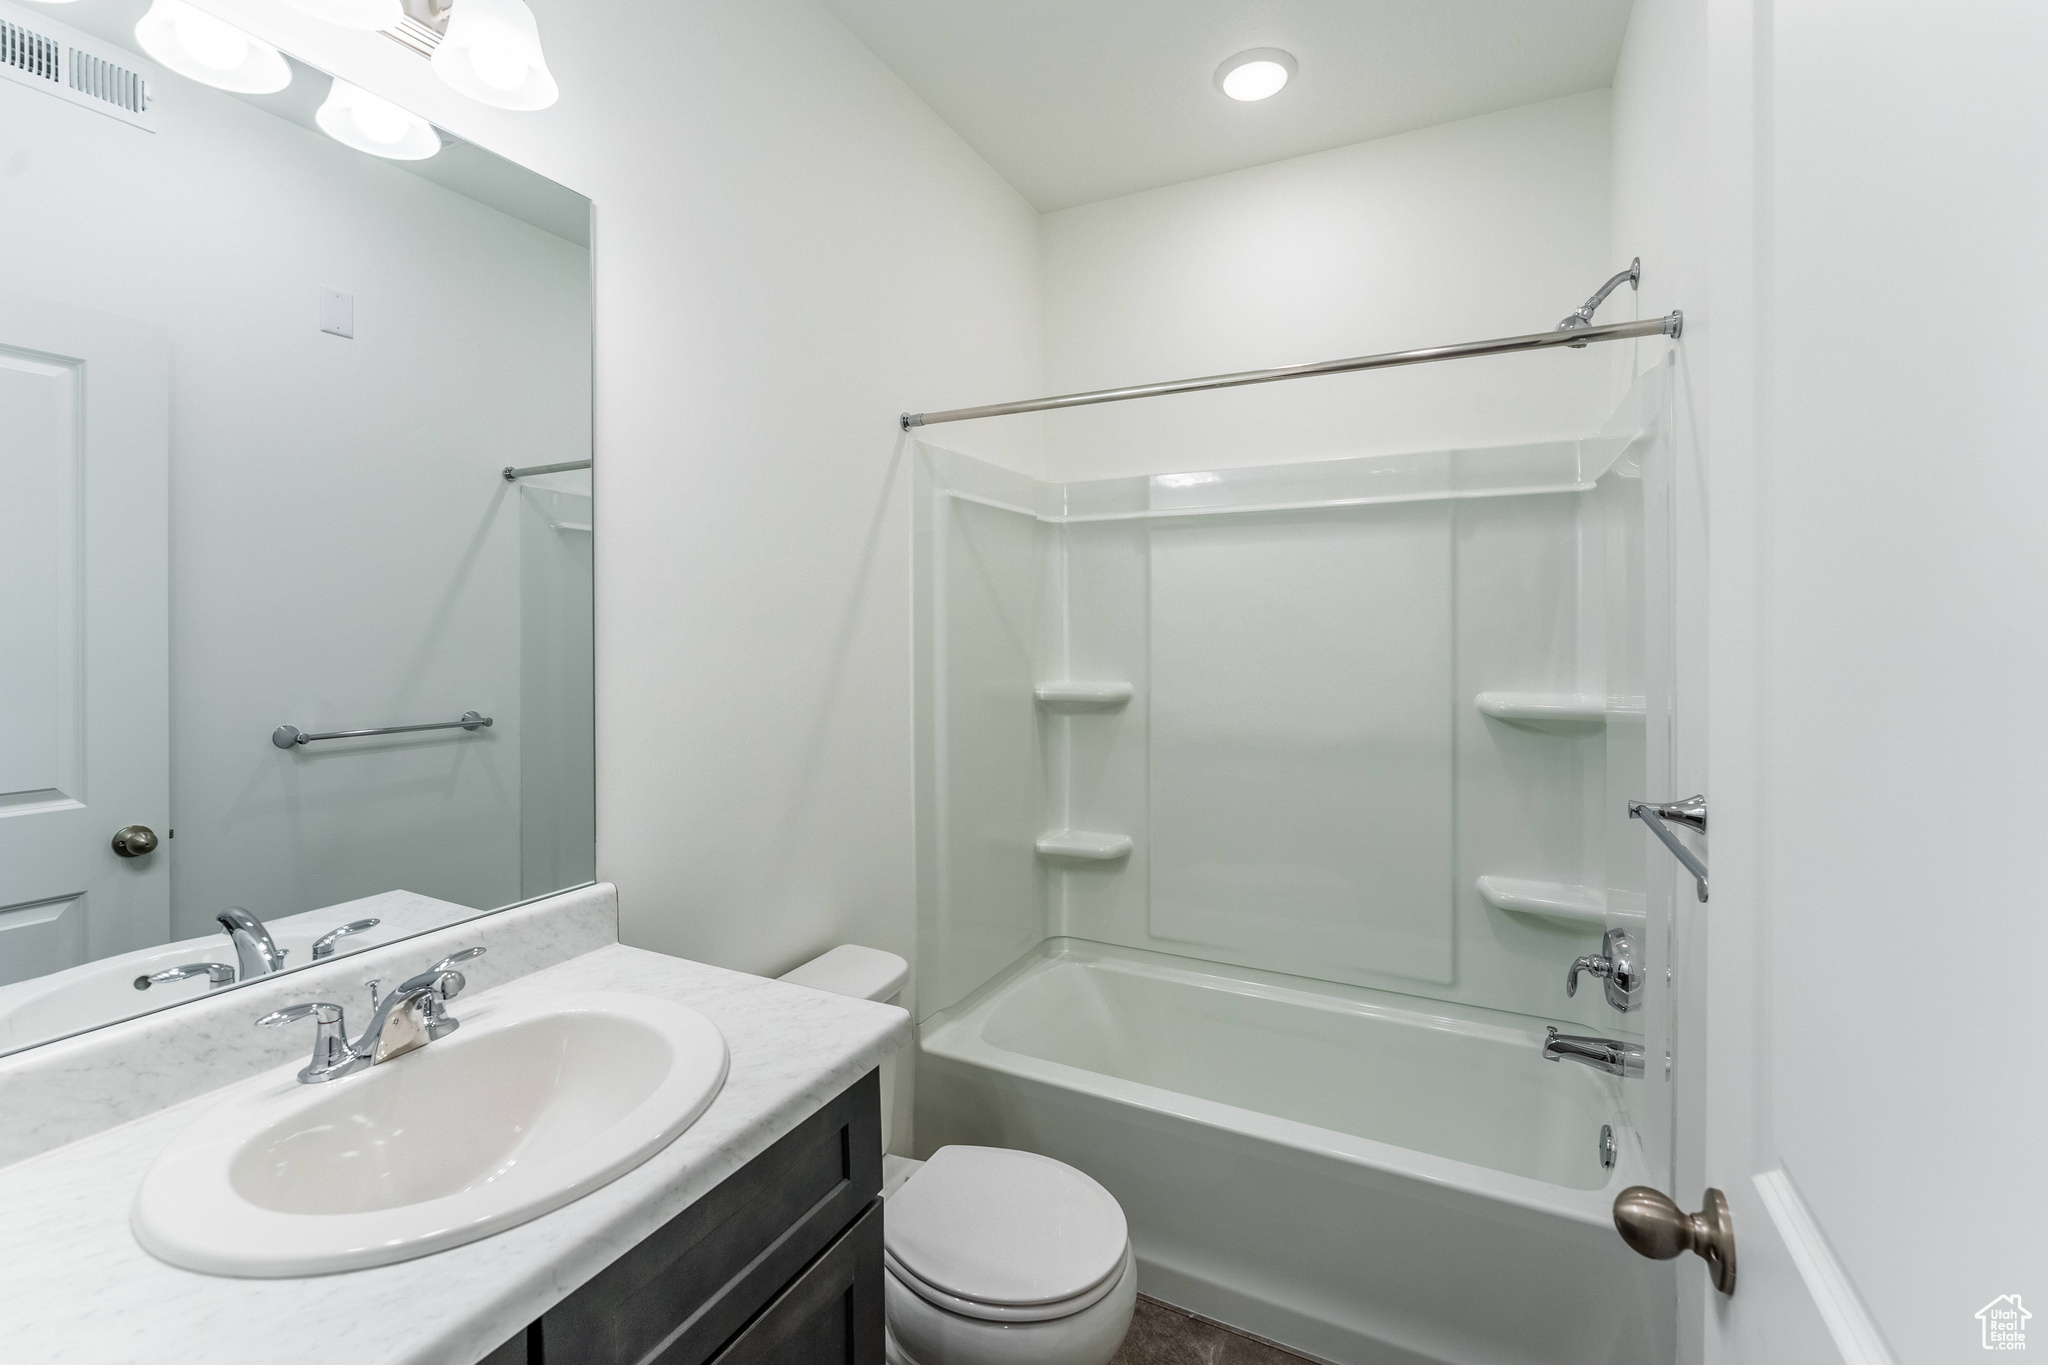 Full bathroom featuring toilet, bathtub / shower combination, and vanity